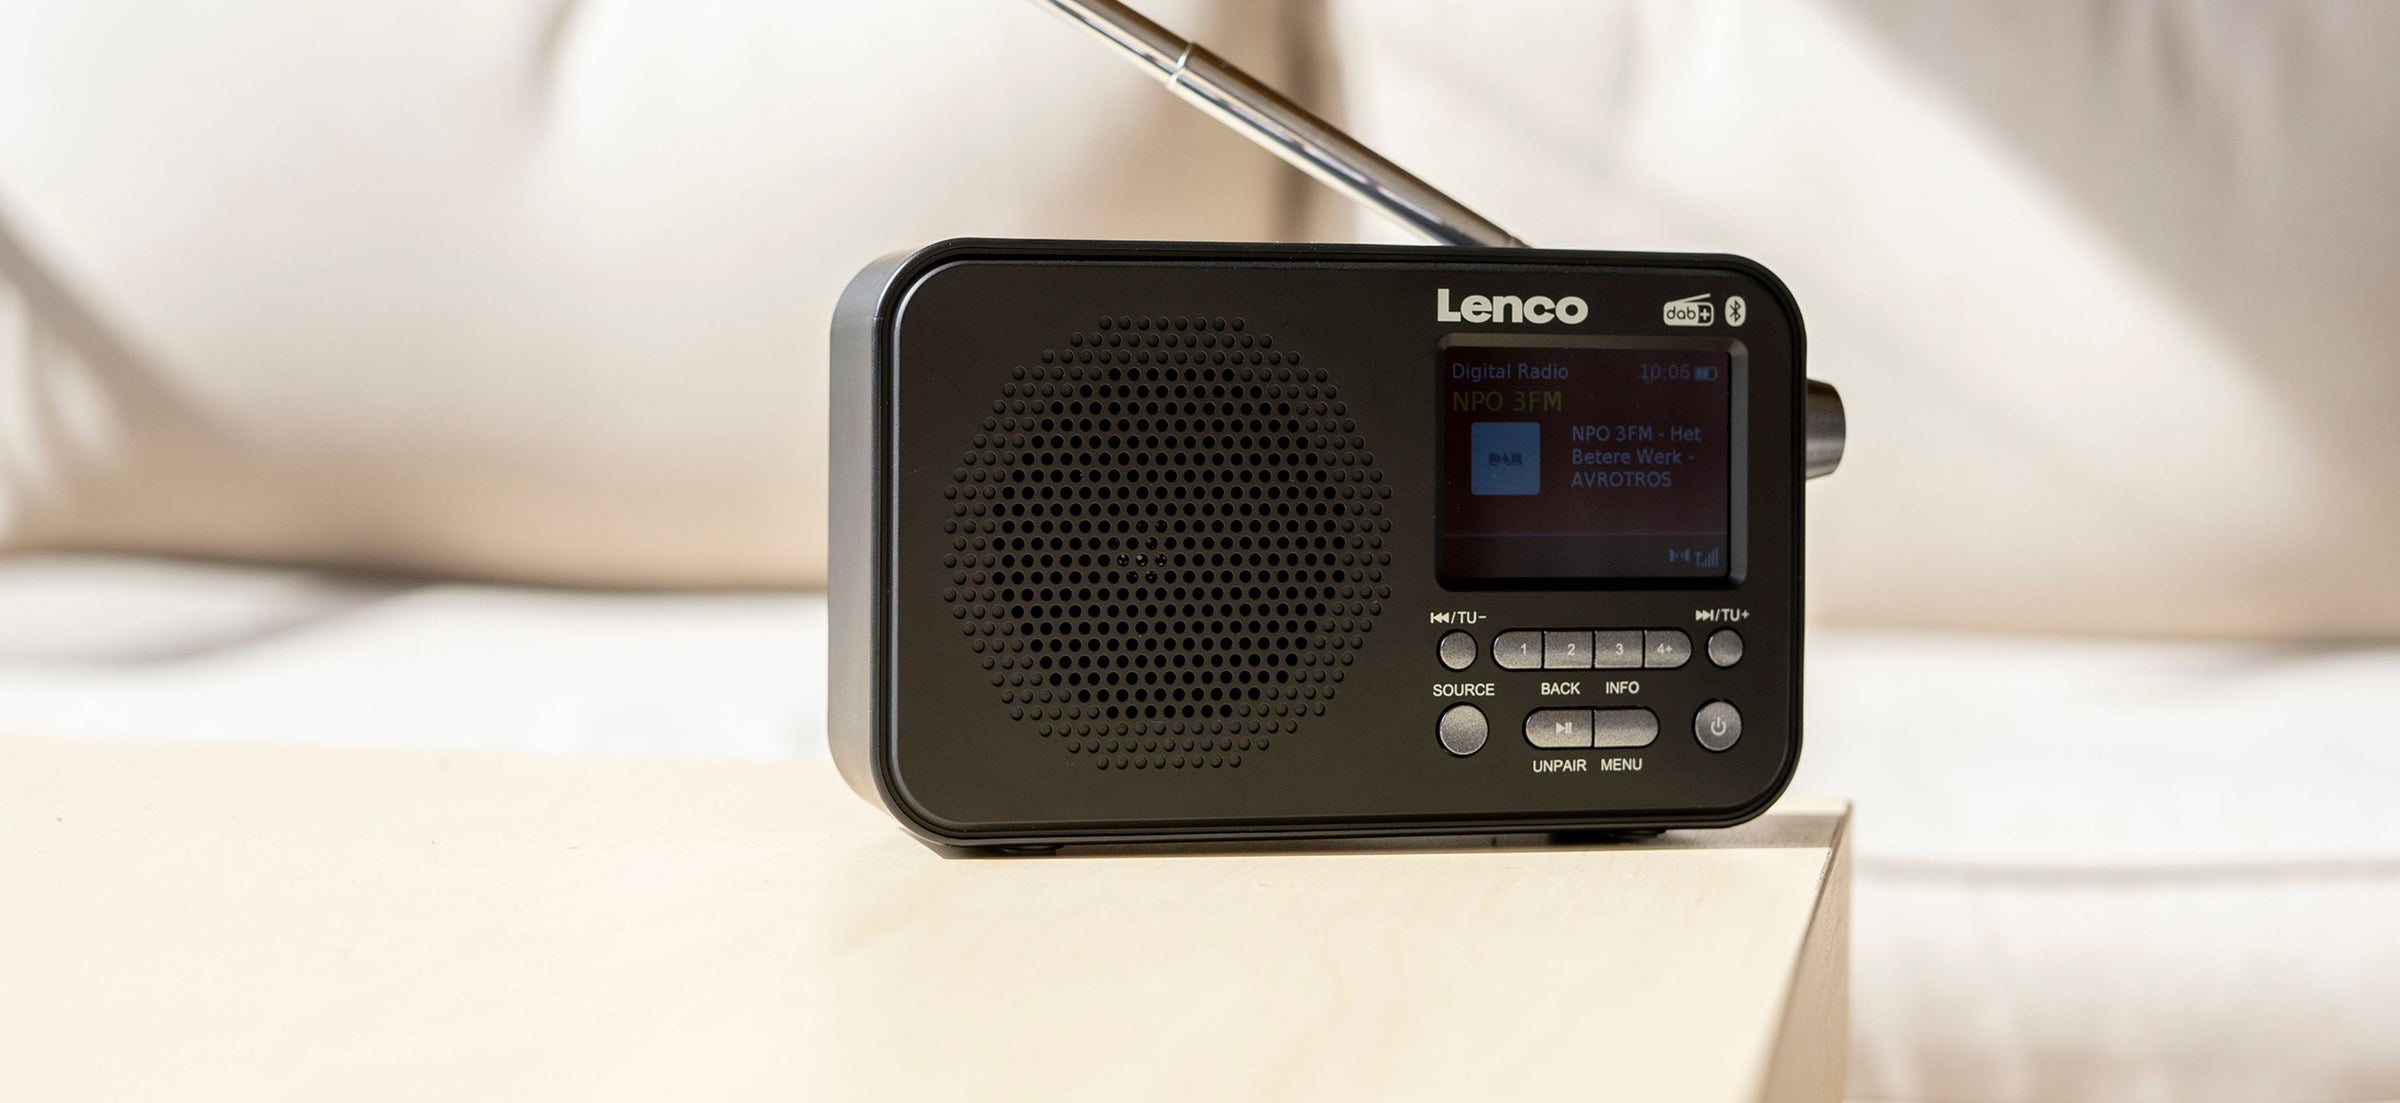 Lenco Bluetooth radios | Official in Shop Now the Lenco